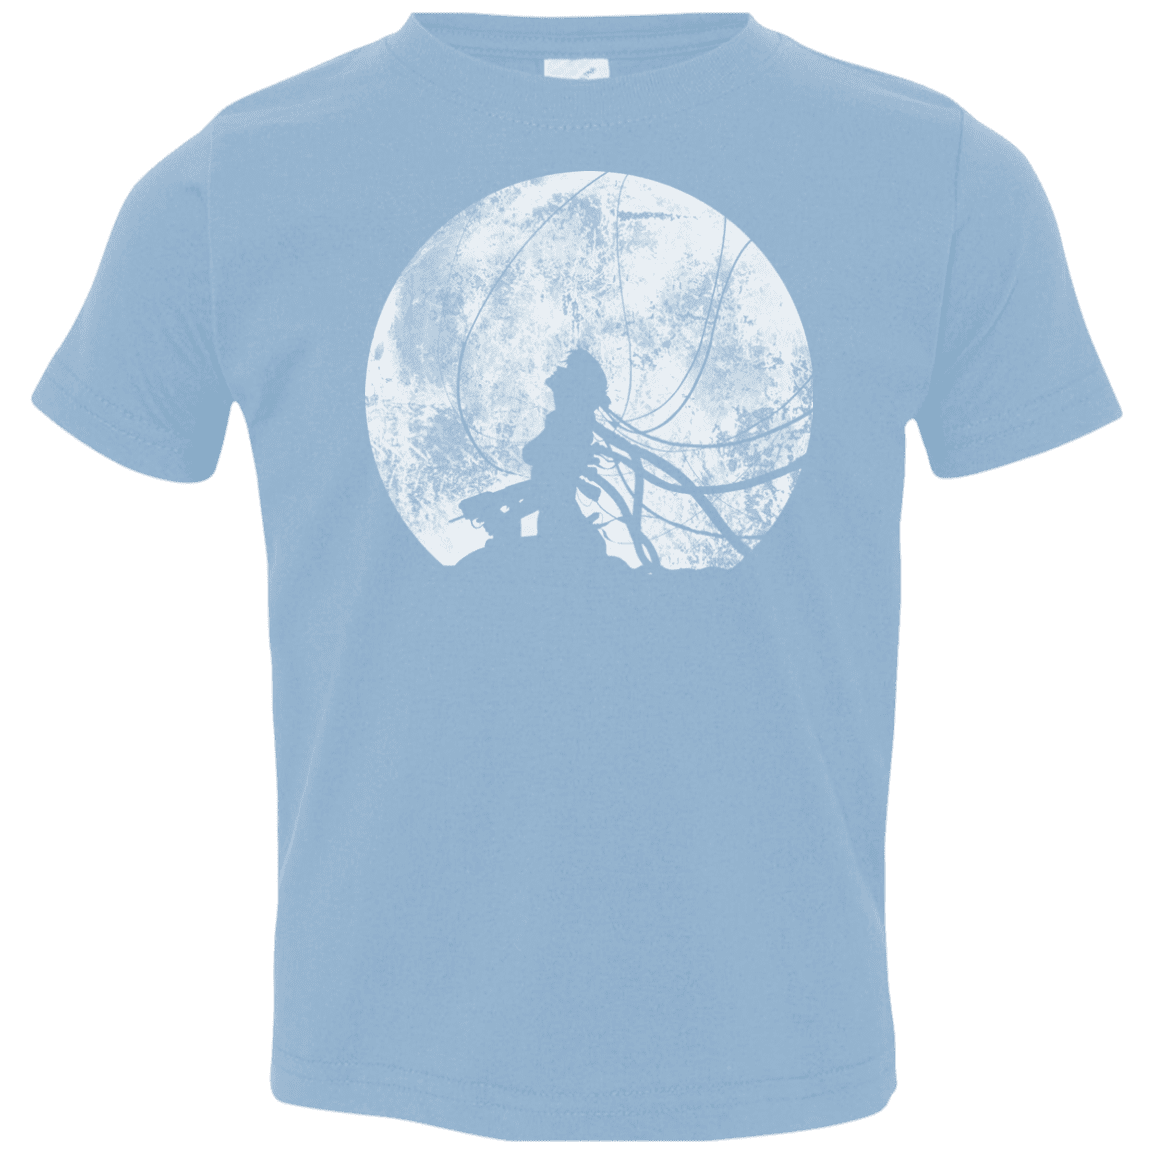 T-Shirts Light Blue / 2T Shell of a Ghost Toddler Premium T-Shirt